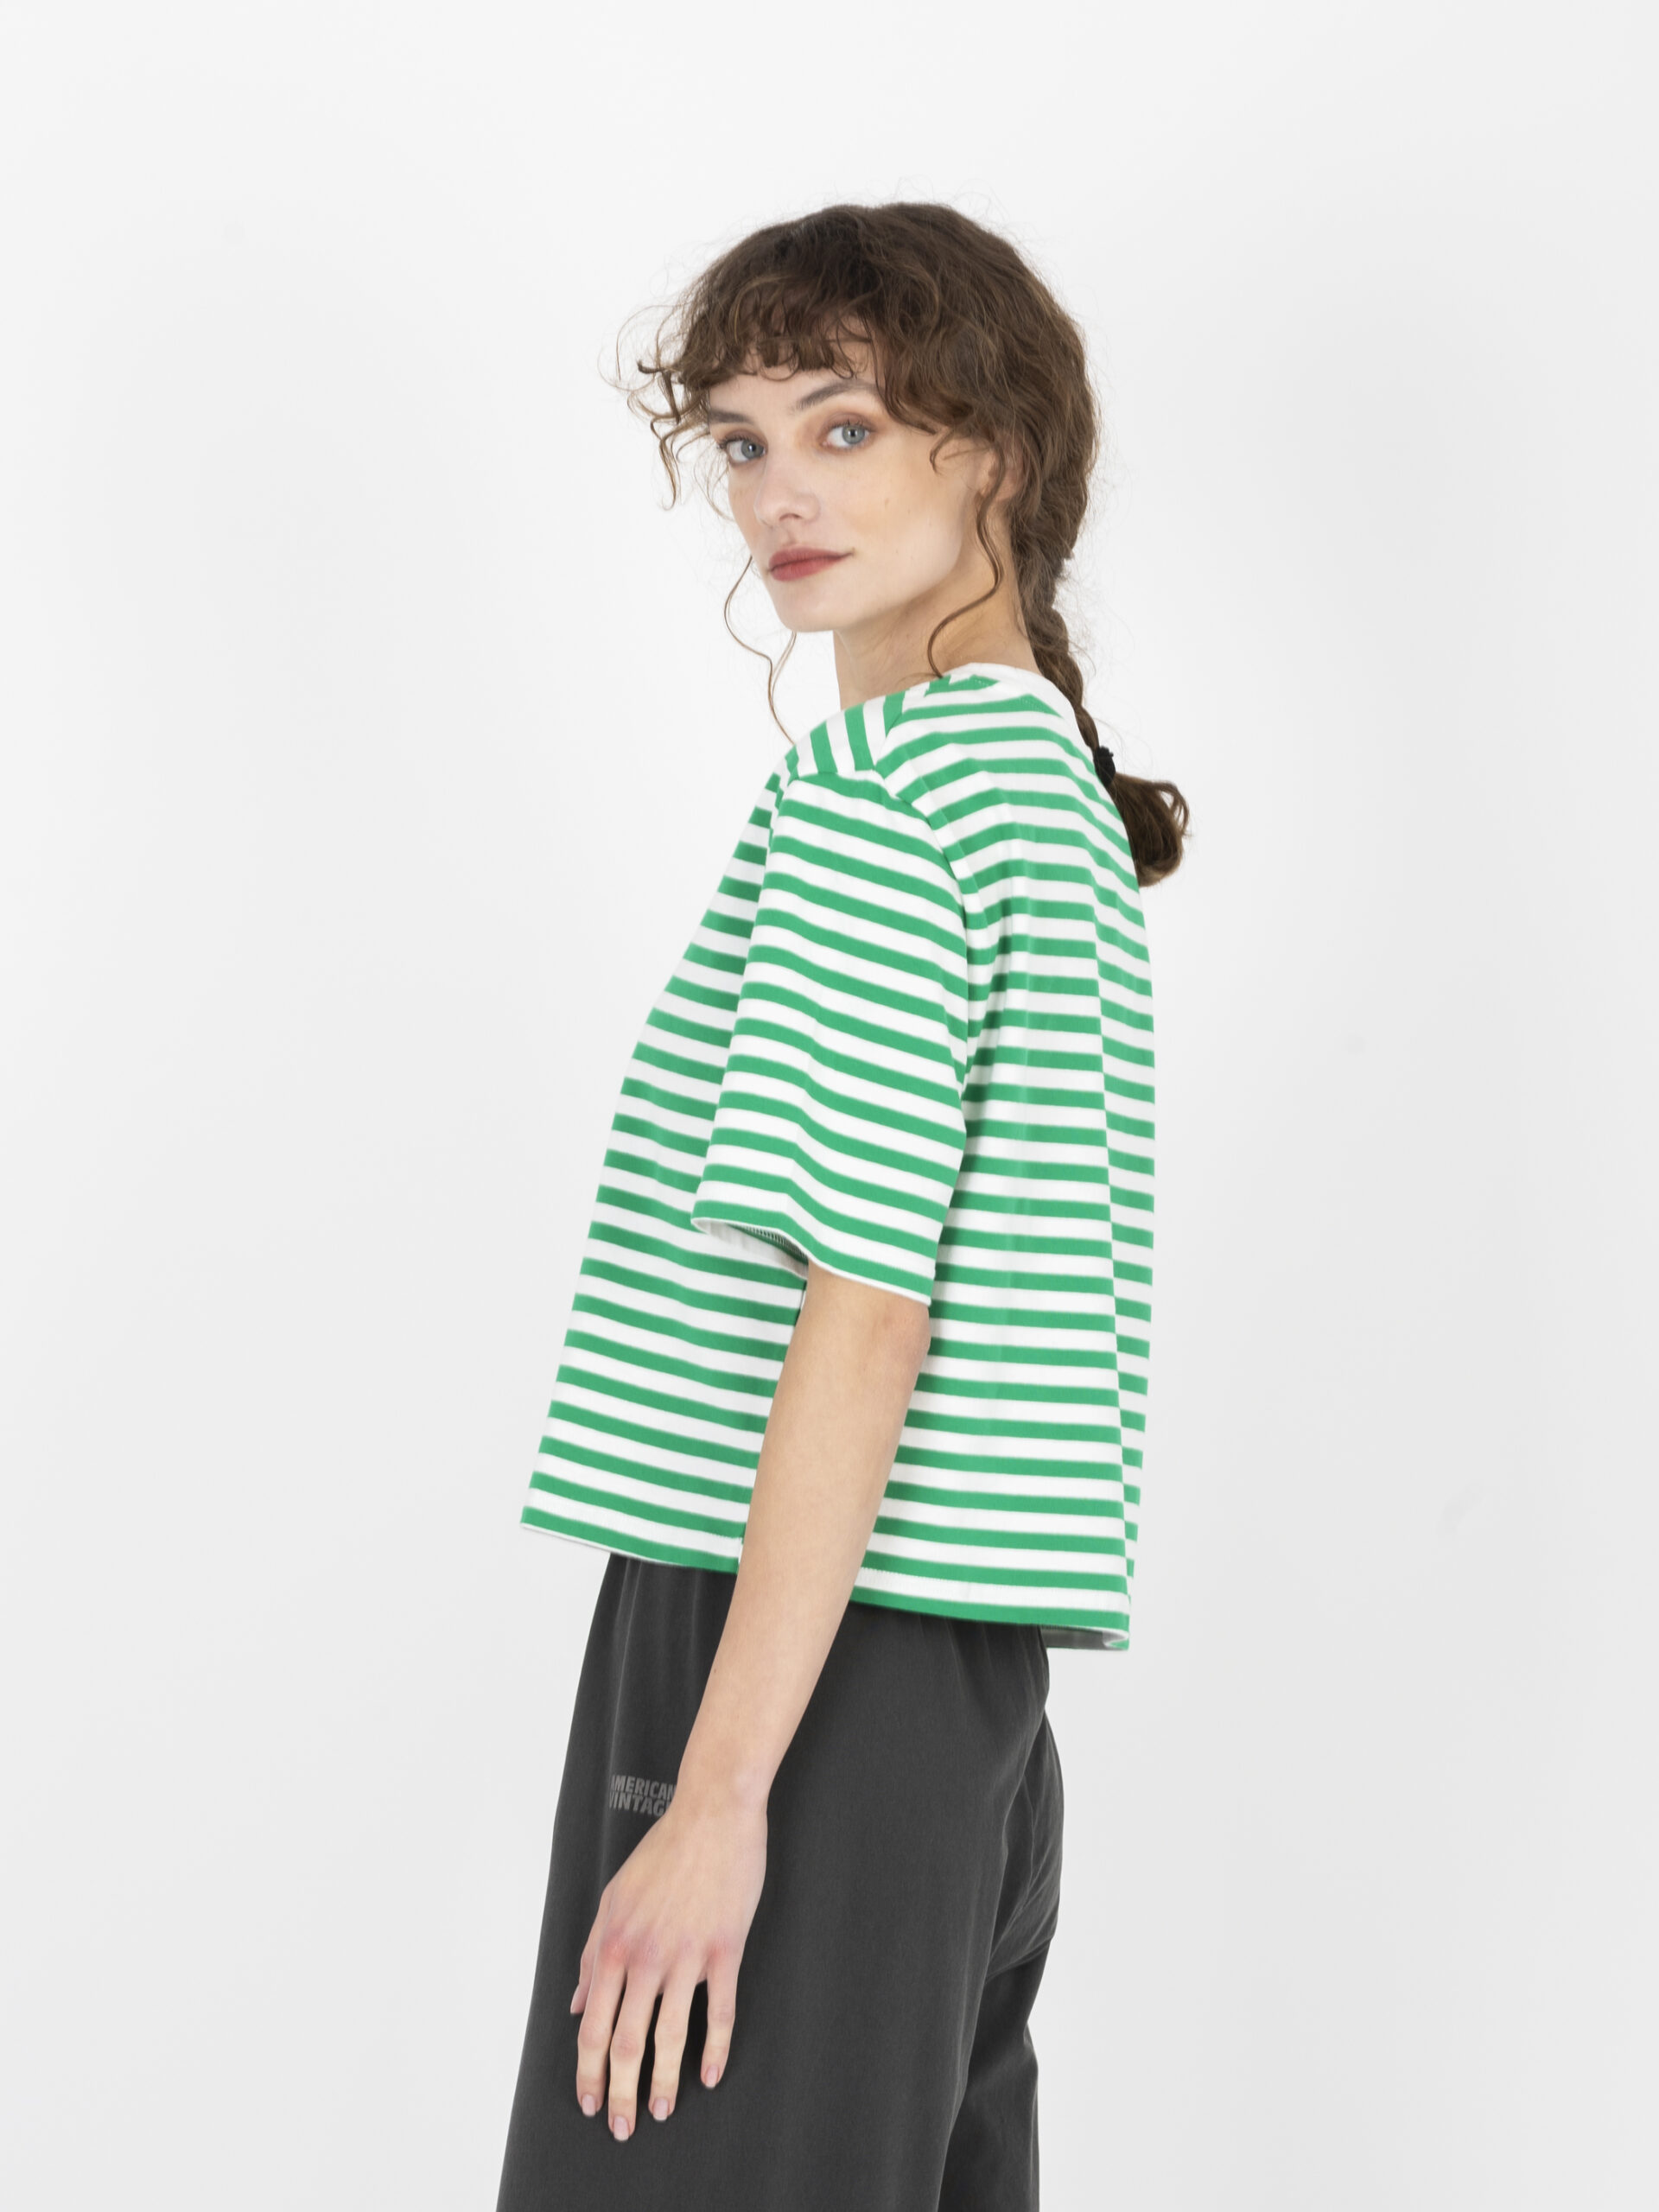 milano-tshirt-green-striped-cotton-suncoo-matchboxathens